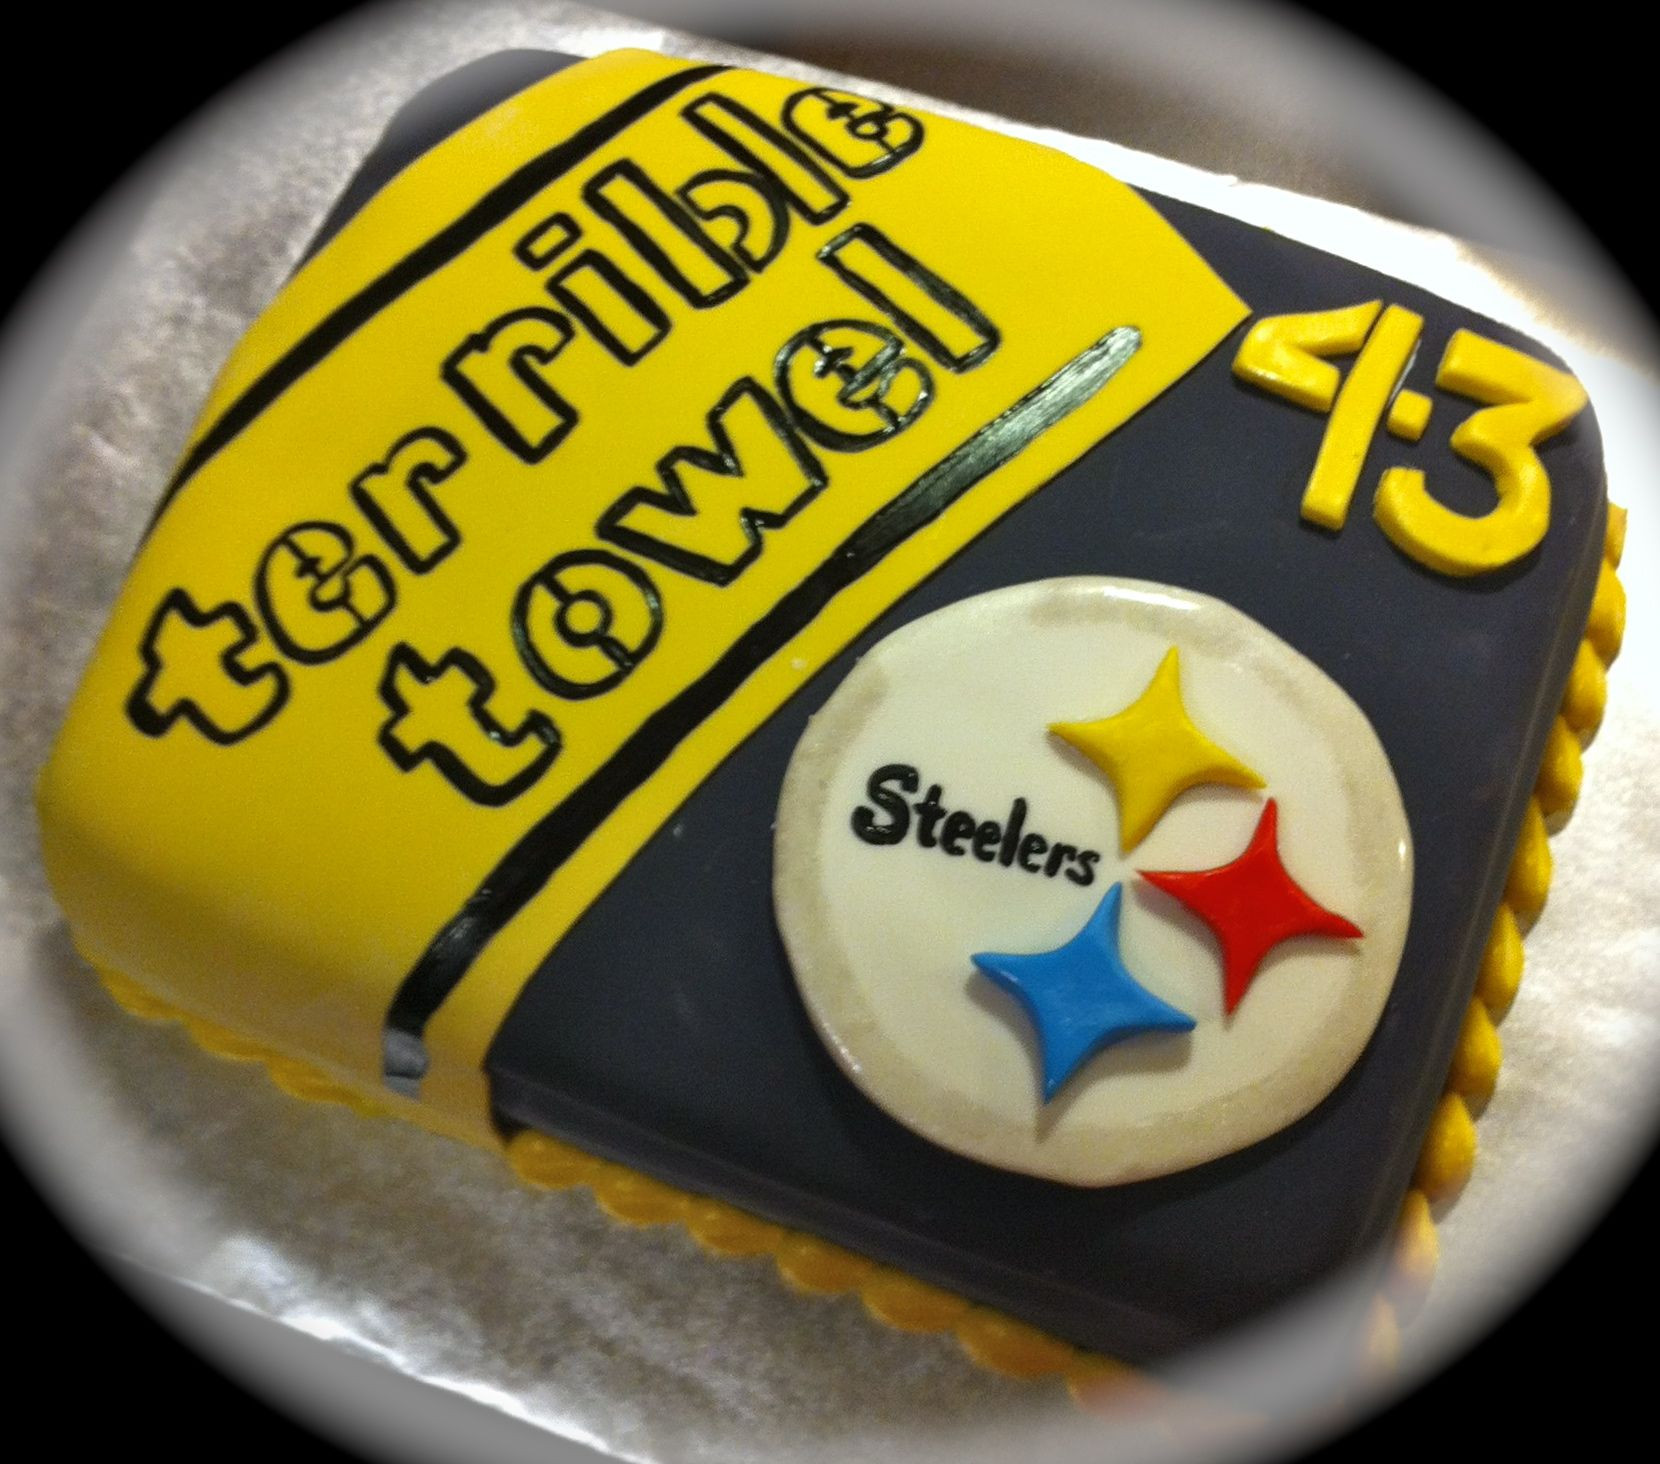 Steelers Wedding Cakes
 Steeler s Cake